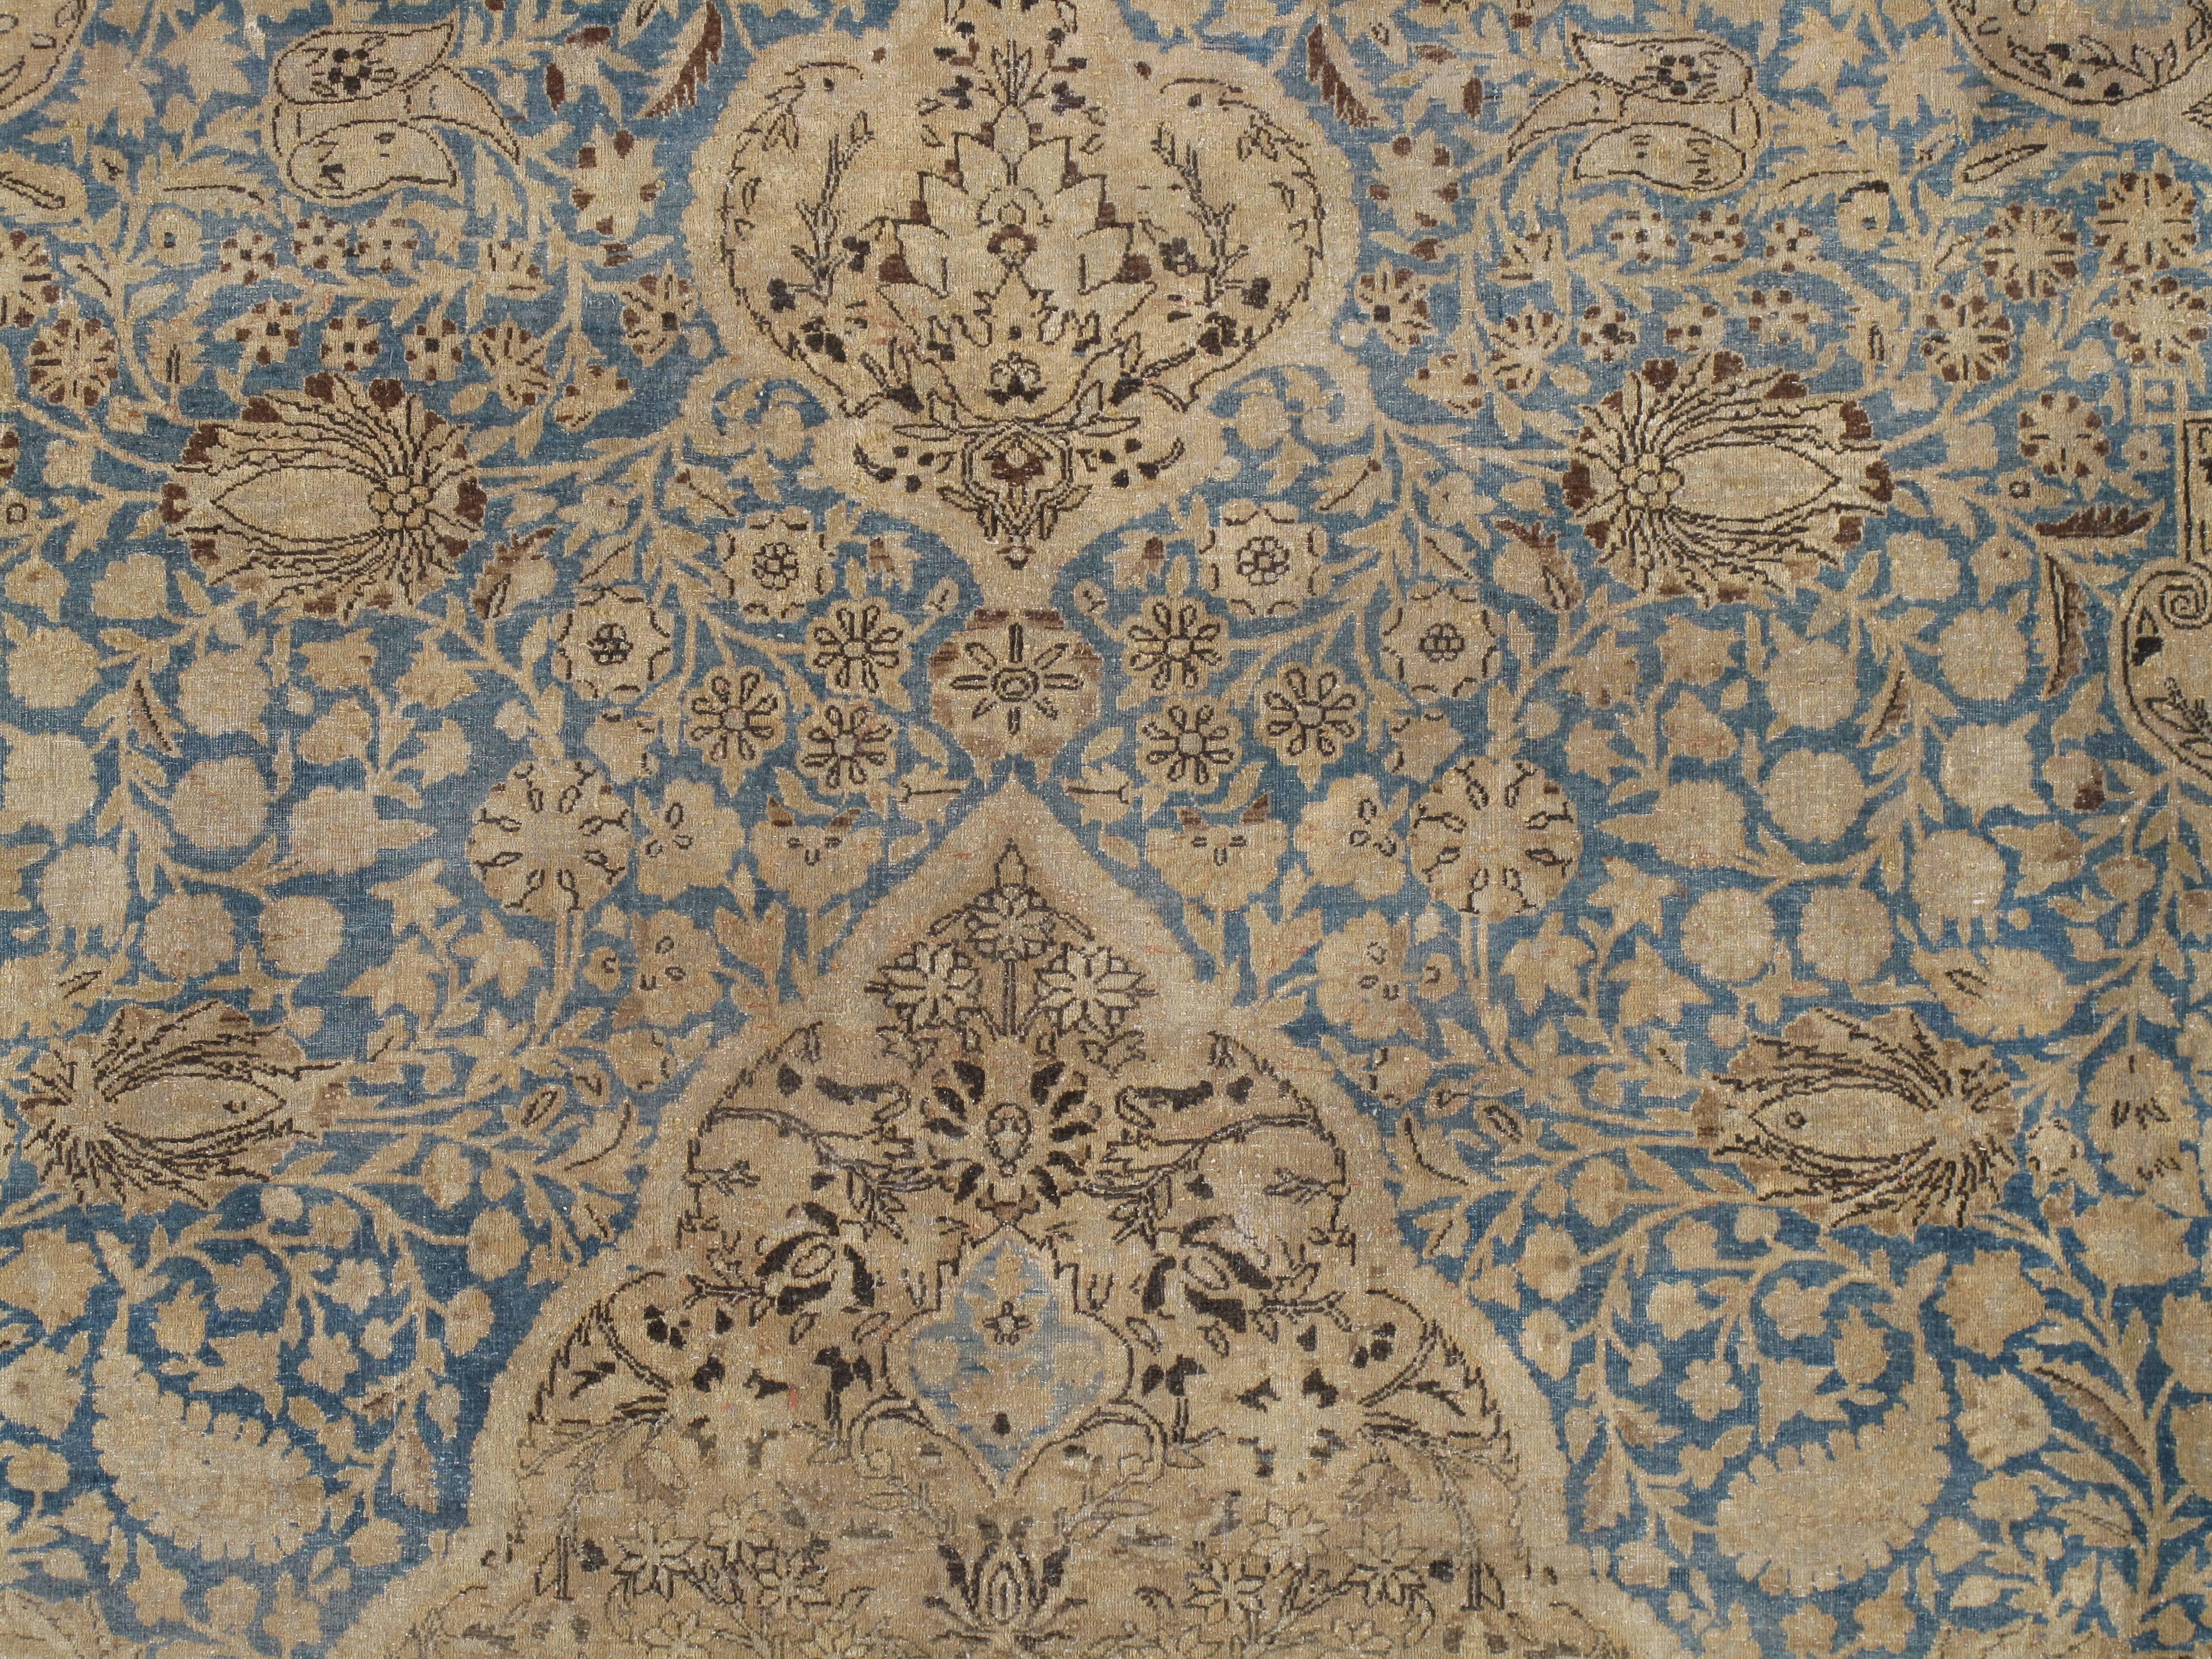 Persian Antique Tabriz Carpet, Handmade Carpet, Light Blue, Gold and Ivory For Sale